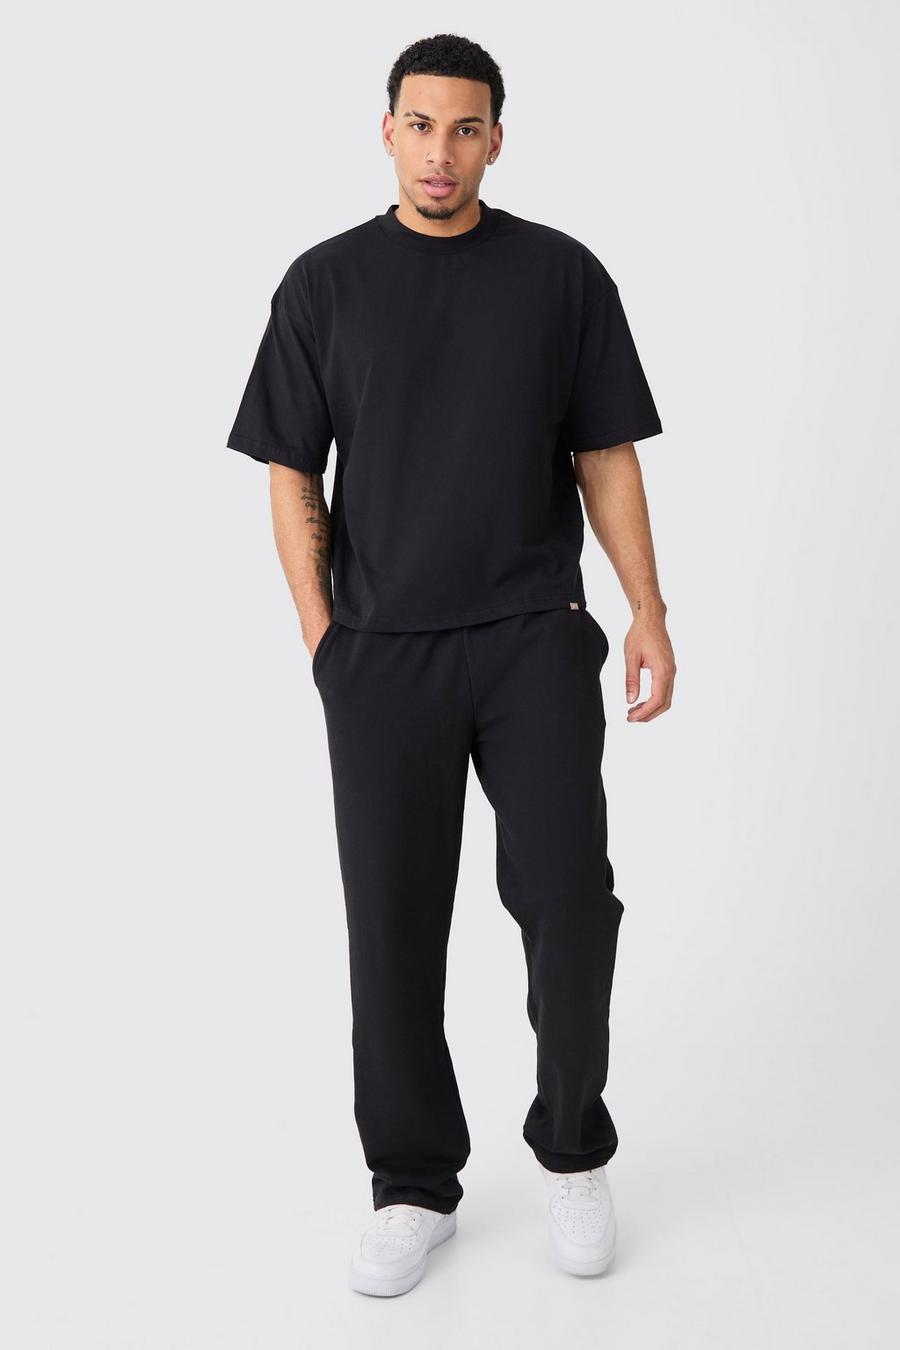 Black Oversized Extended Neck Boxy Heavy T-Shirt And Jogger Set